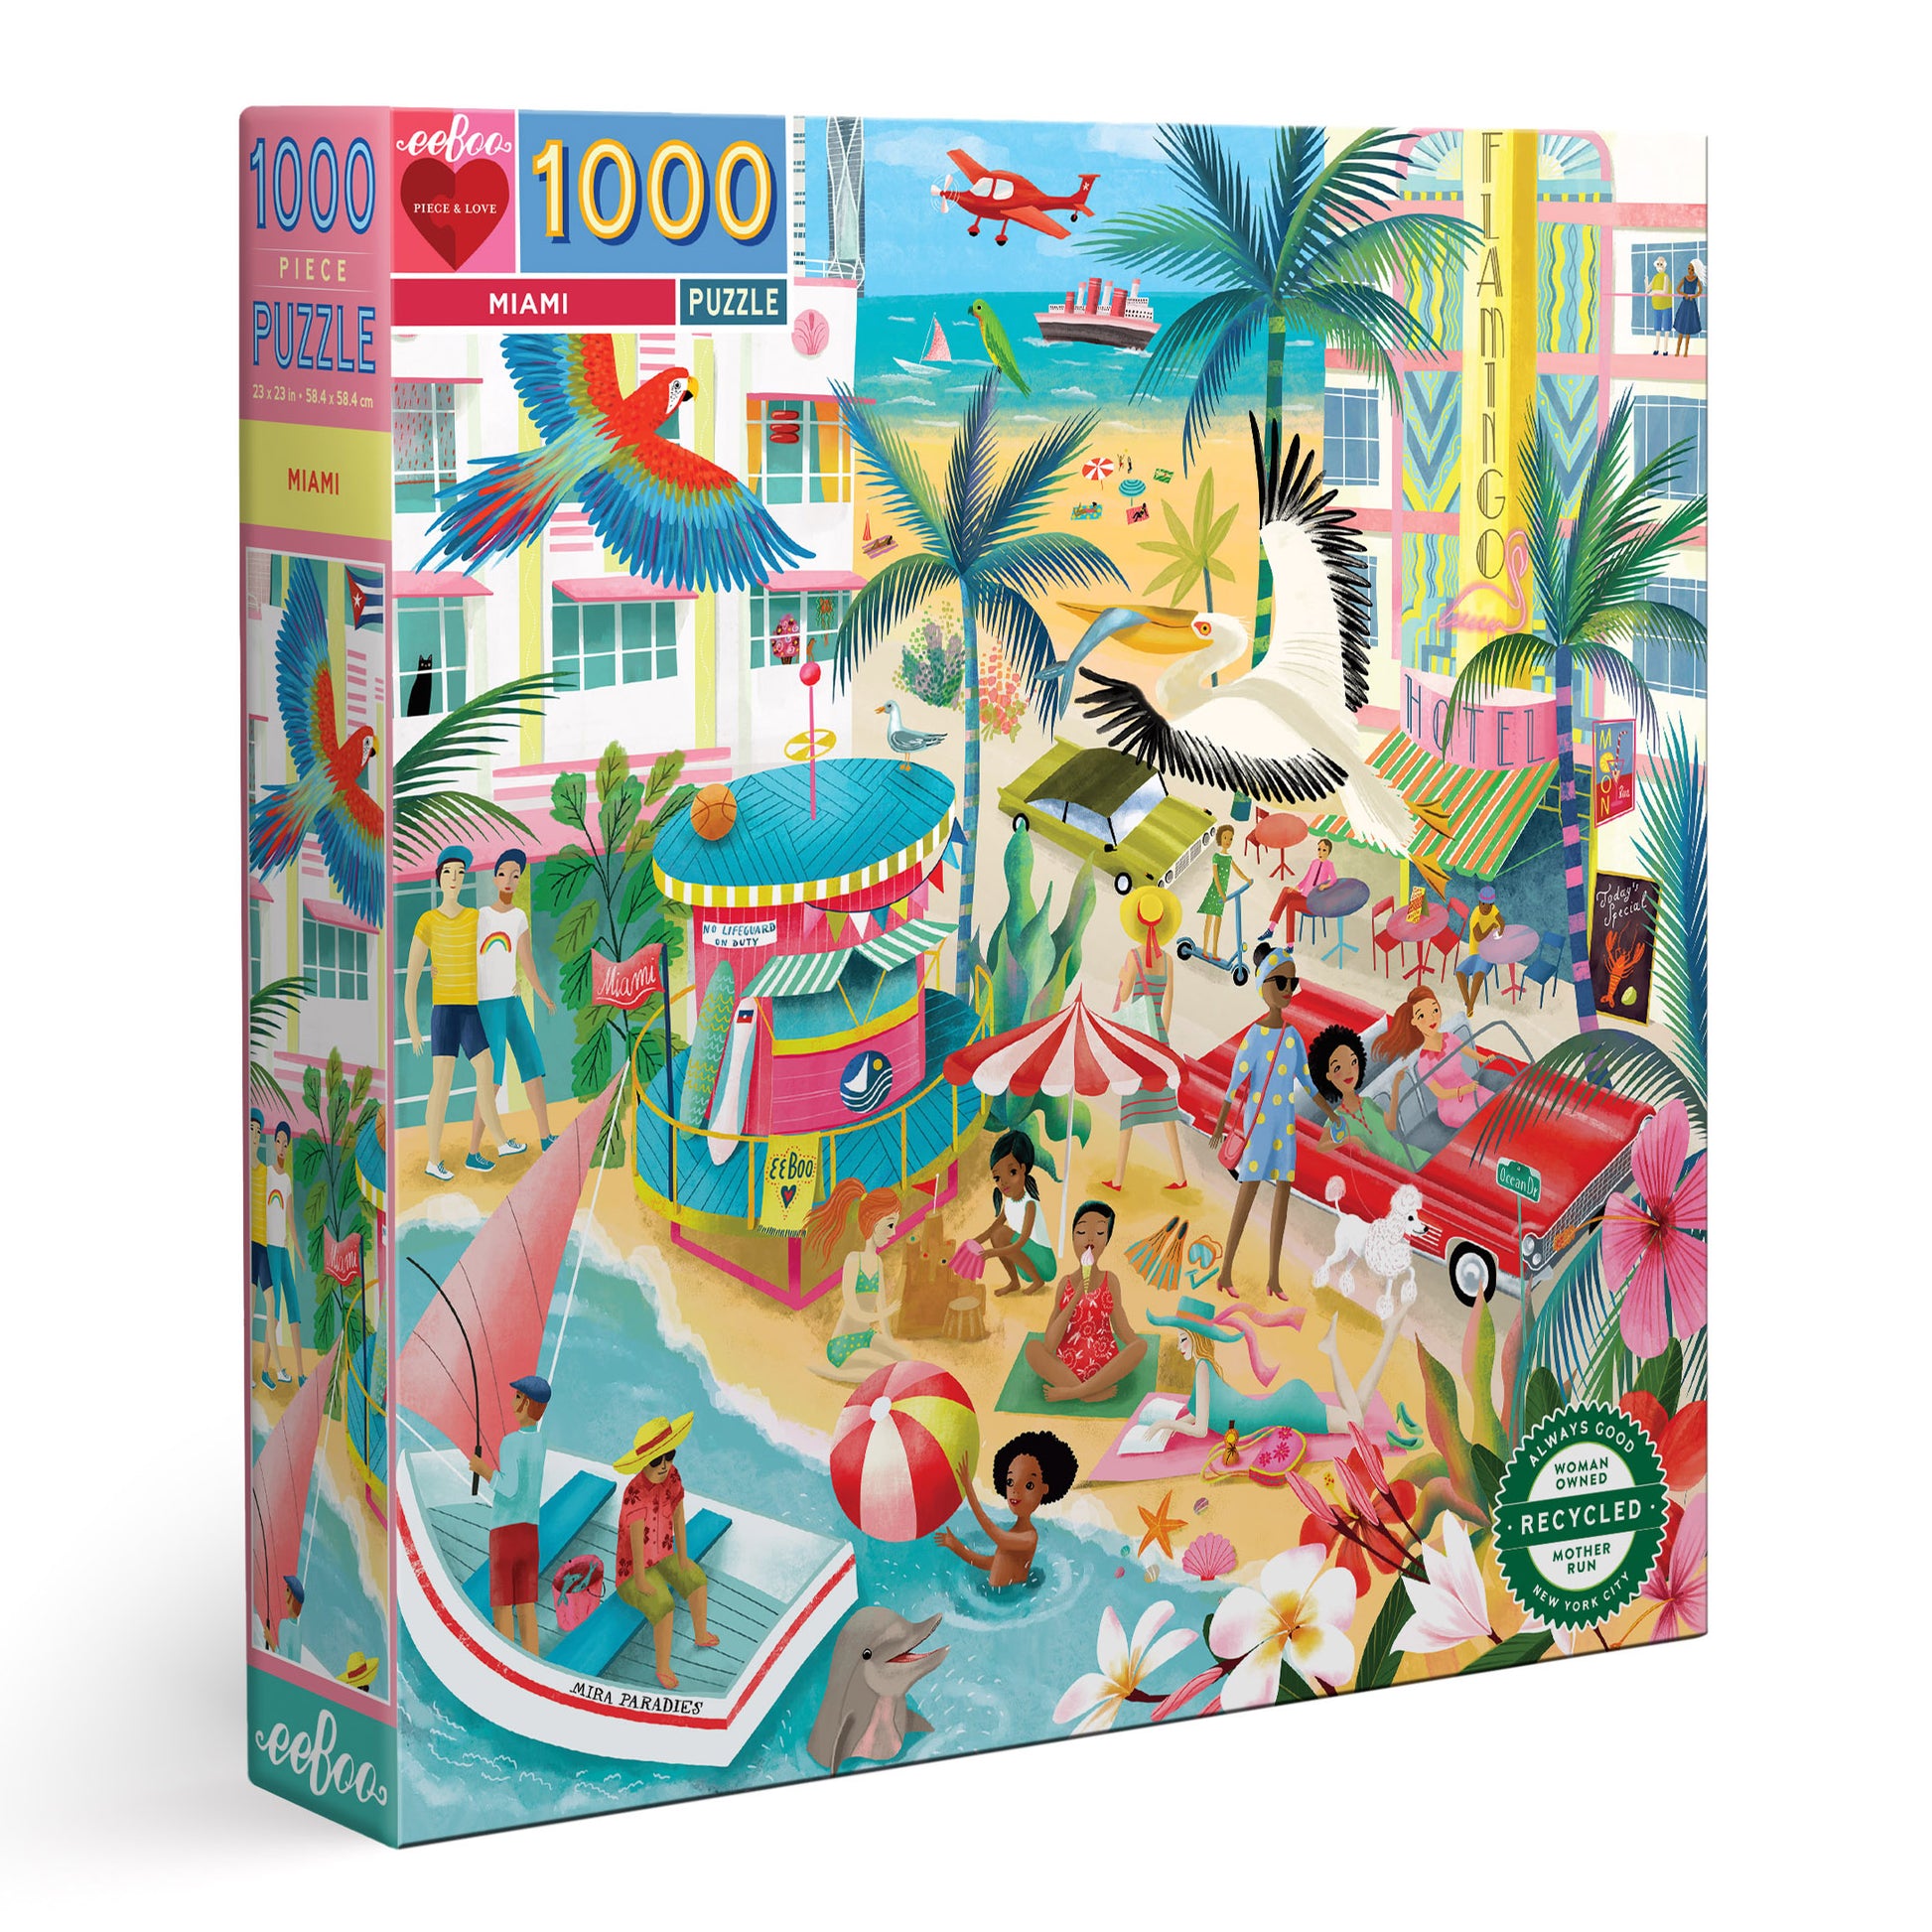 Miami 1000 Piece Puzzle